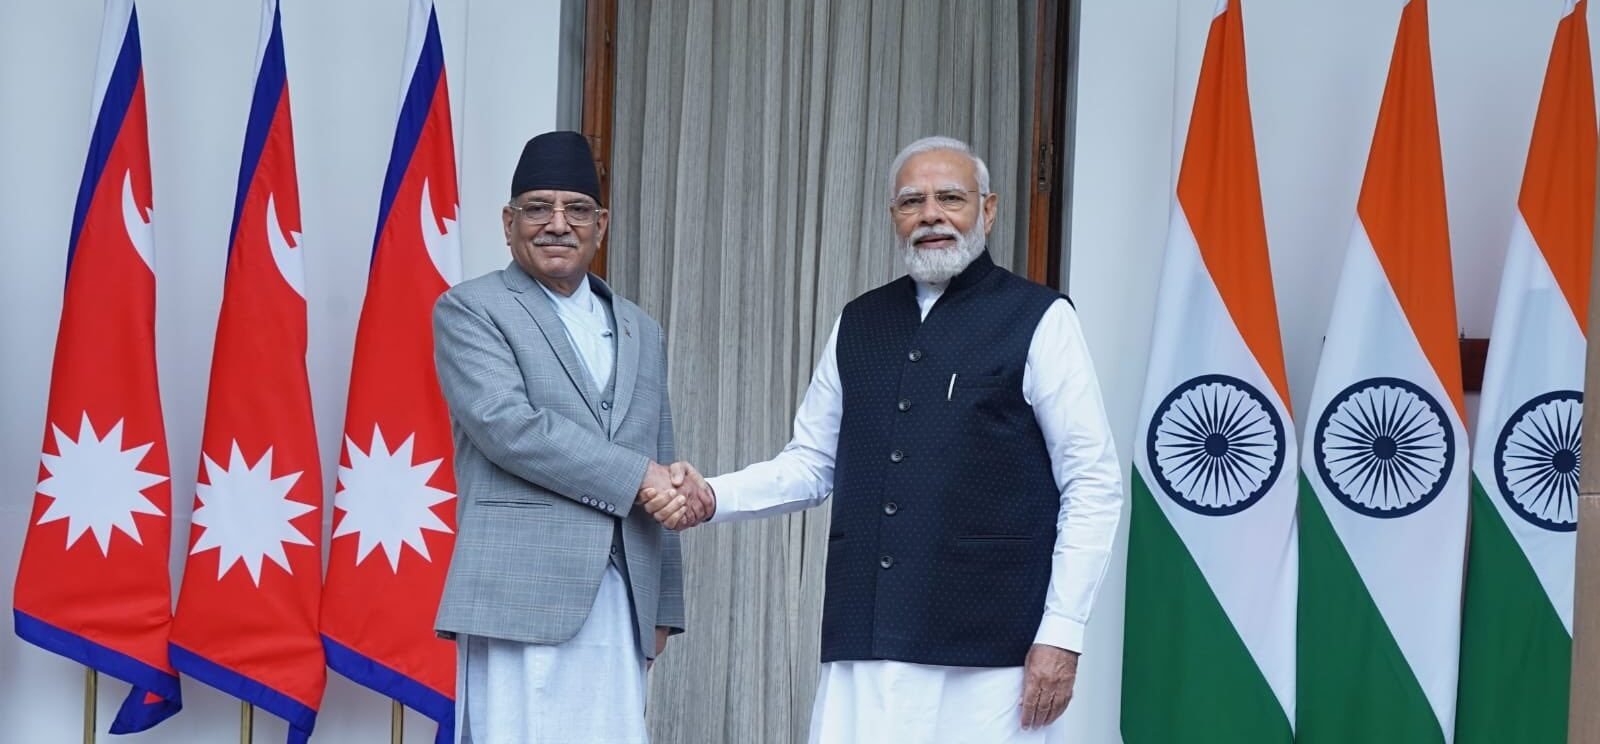 PM Narendra Modi greets PM cm Comrade Prachanda of Nepal